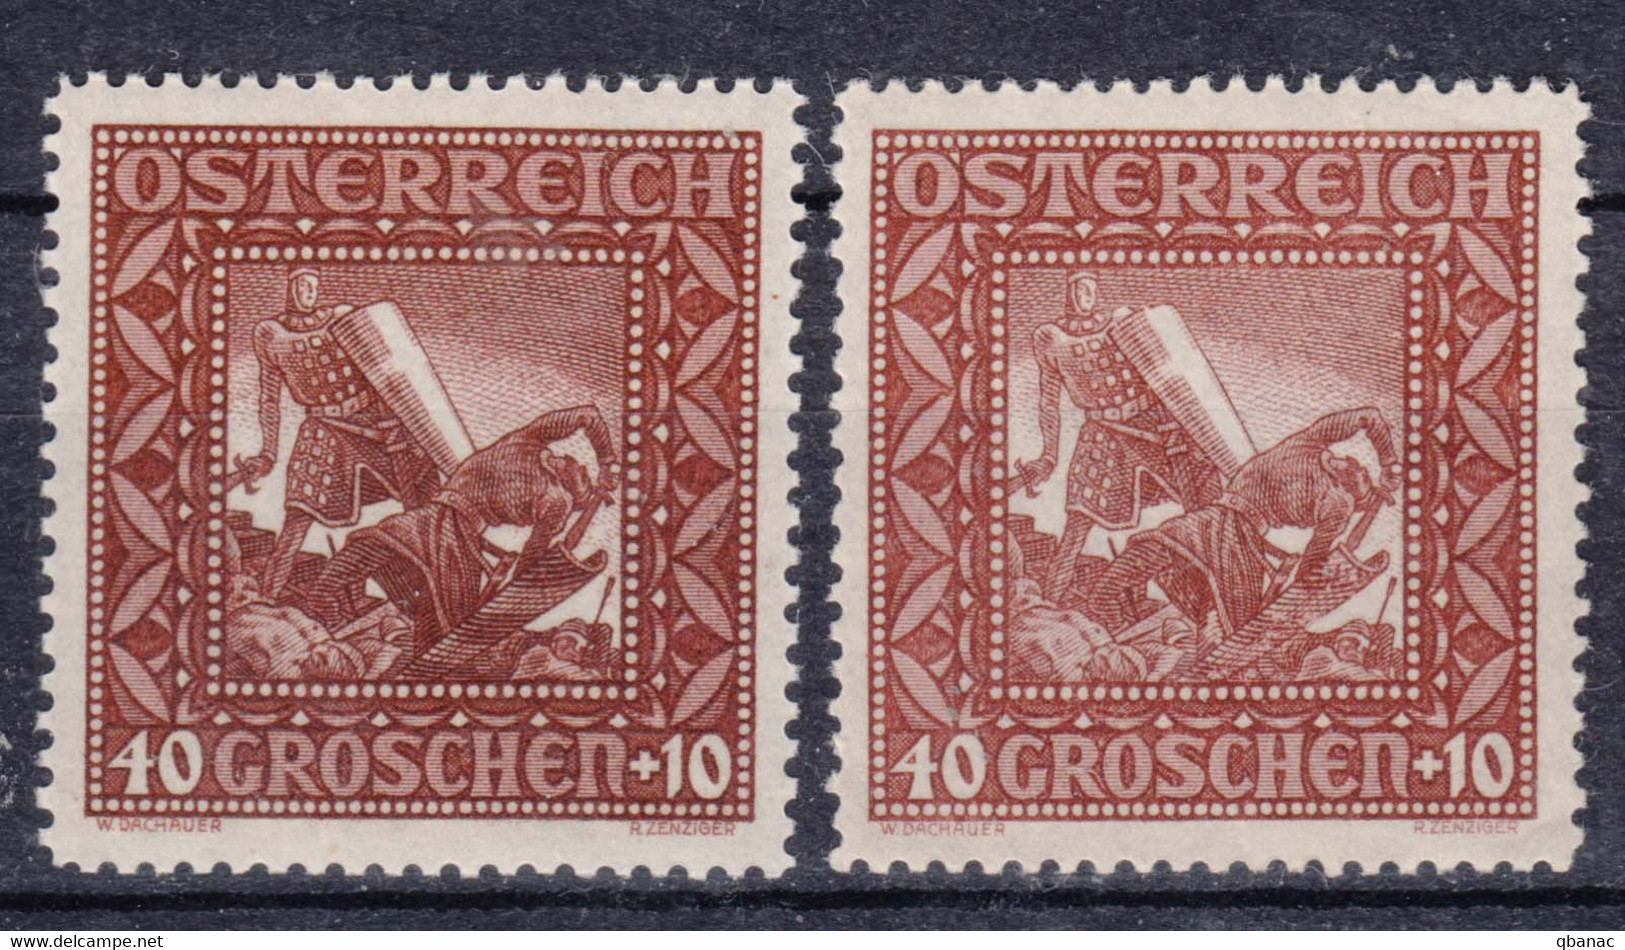 Austria 1926 Mi#493 I And II, Mint Hinged - Ungebraucht